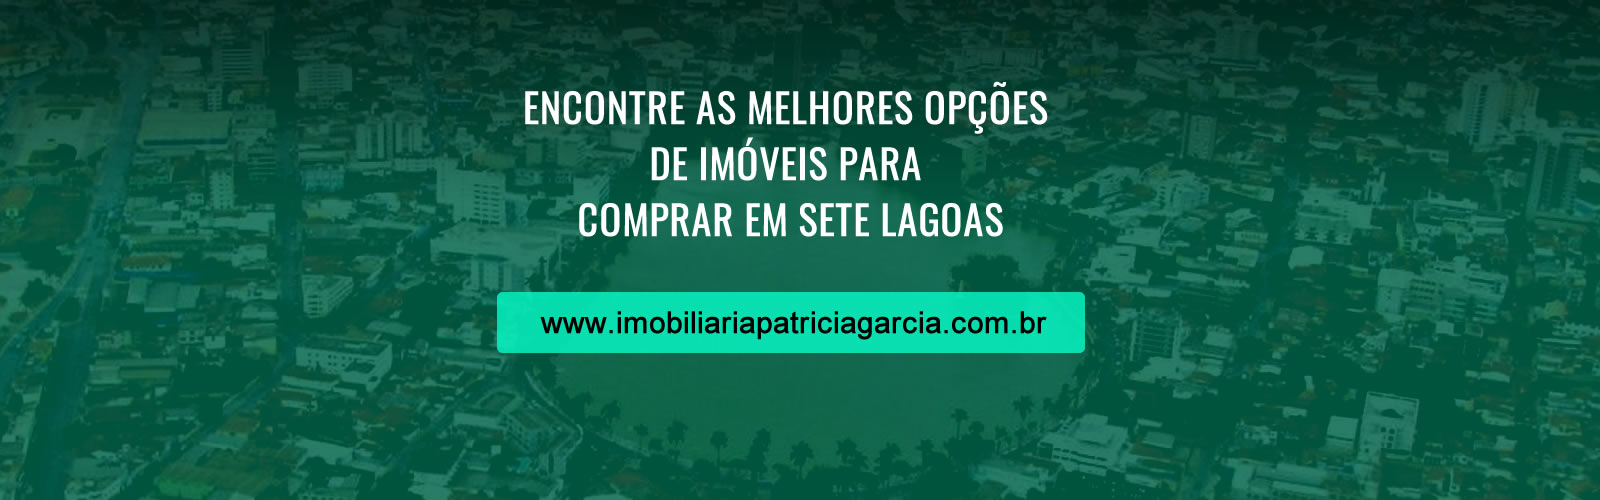 Imóvel em Sete Lagoas - banner1